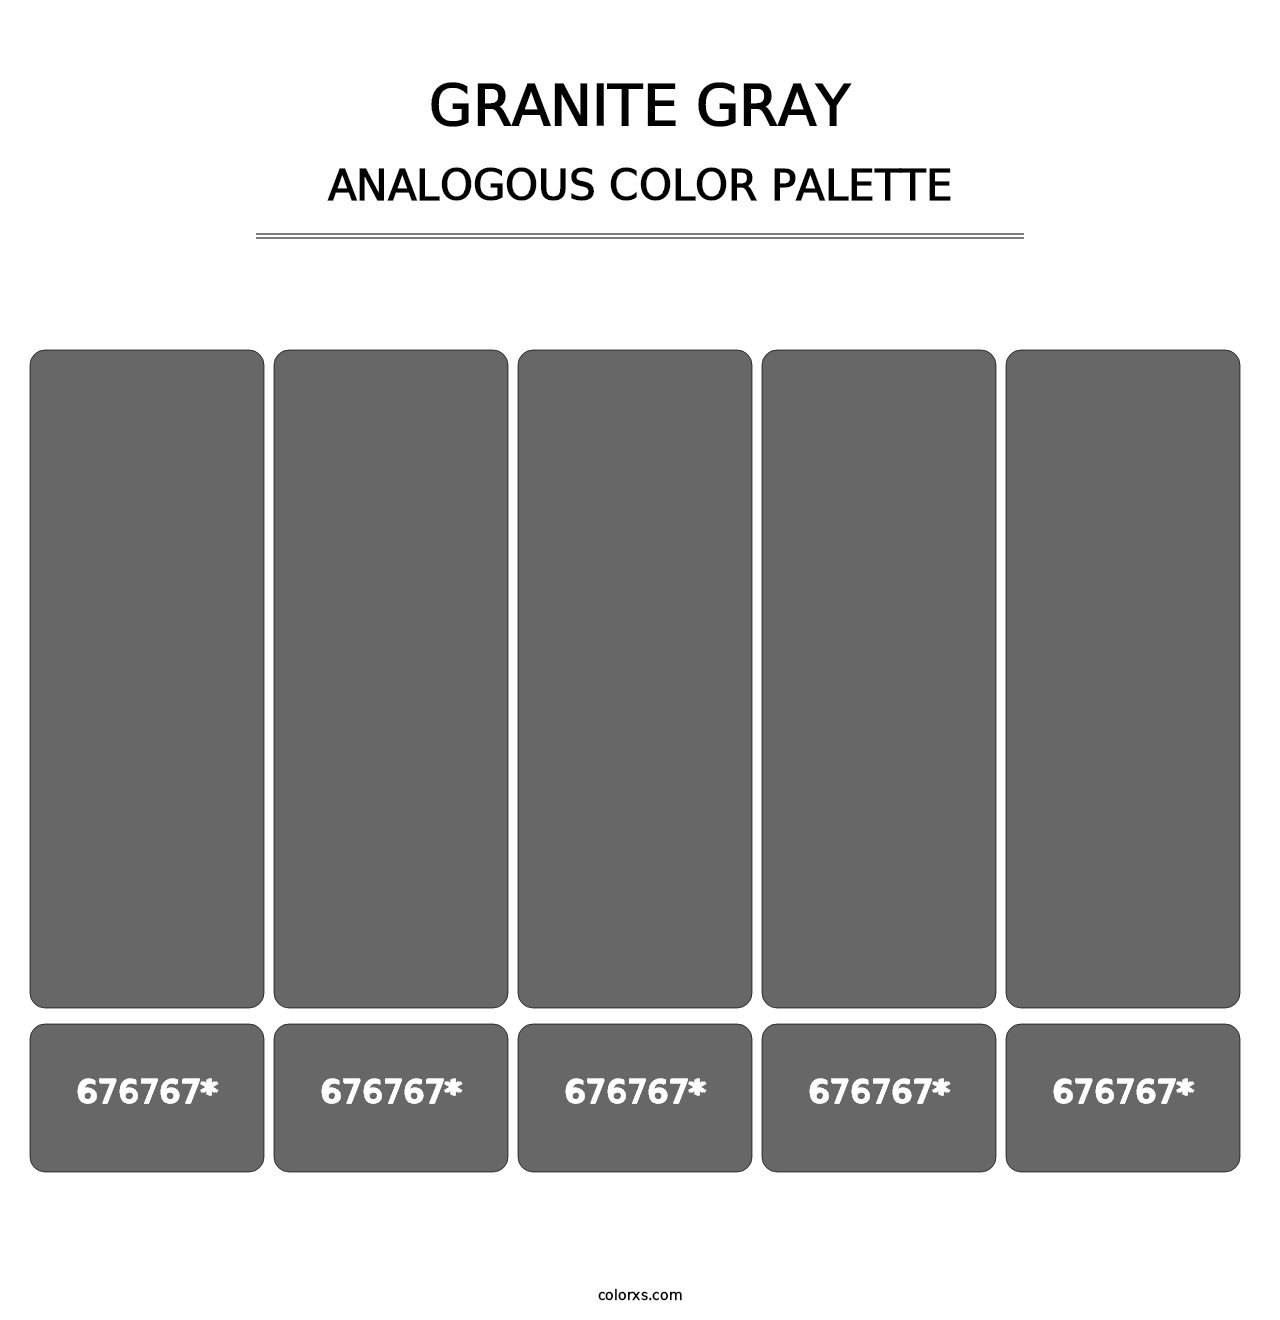 Granite Gray - Analogous Color Palette